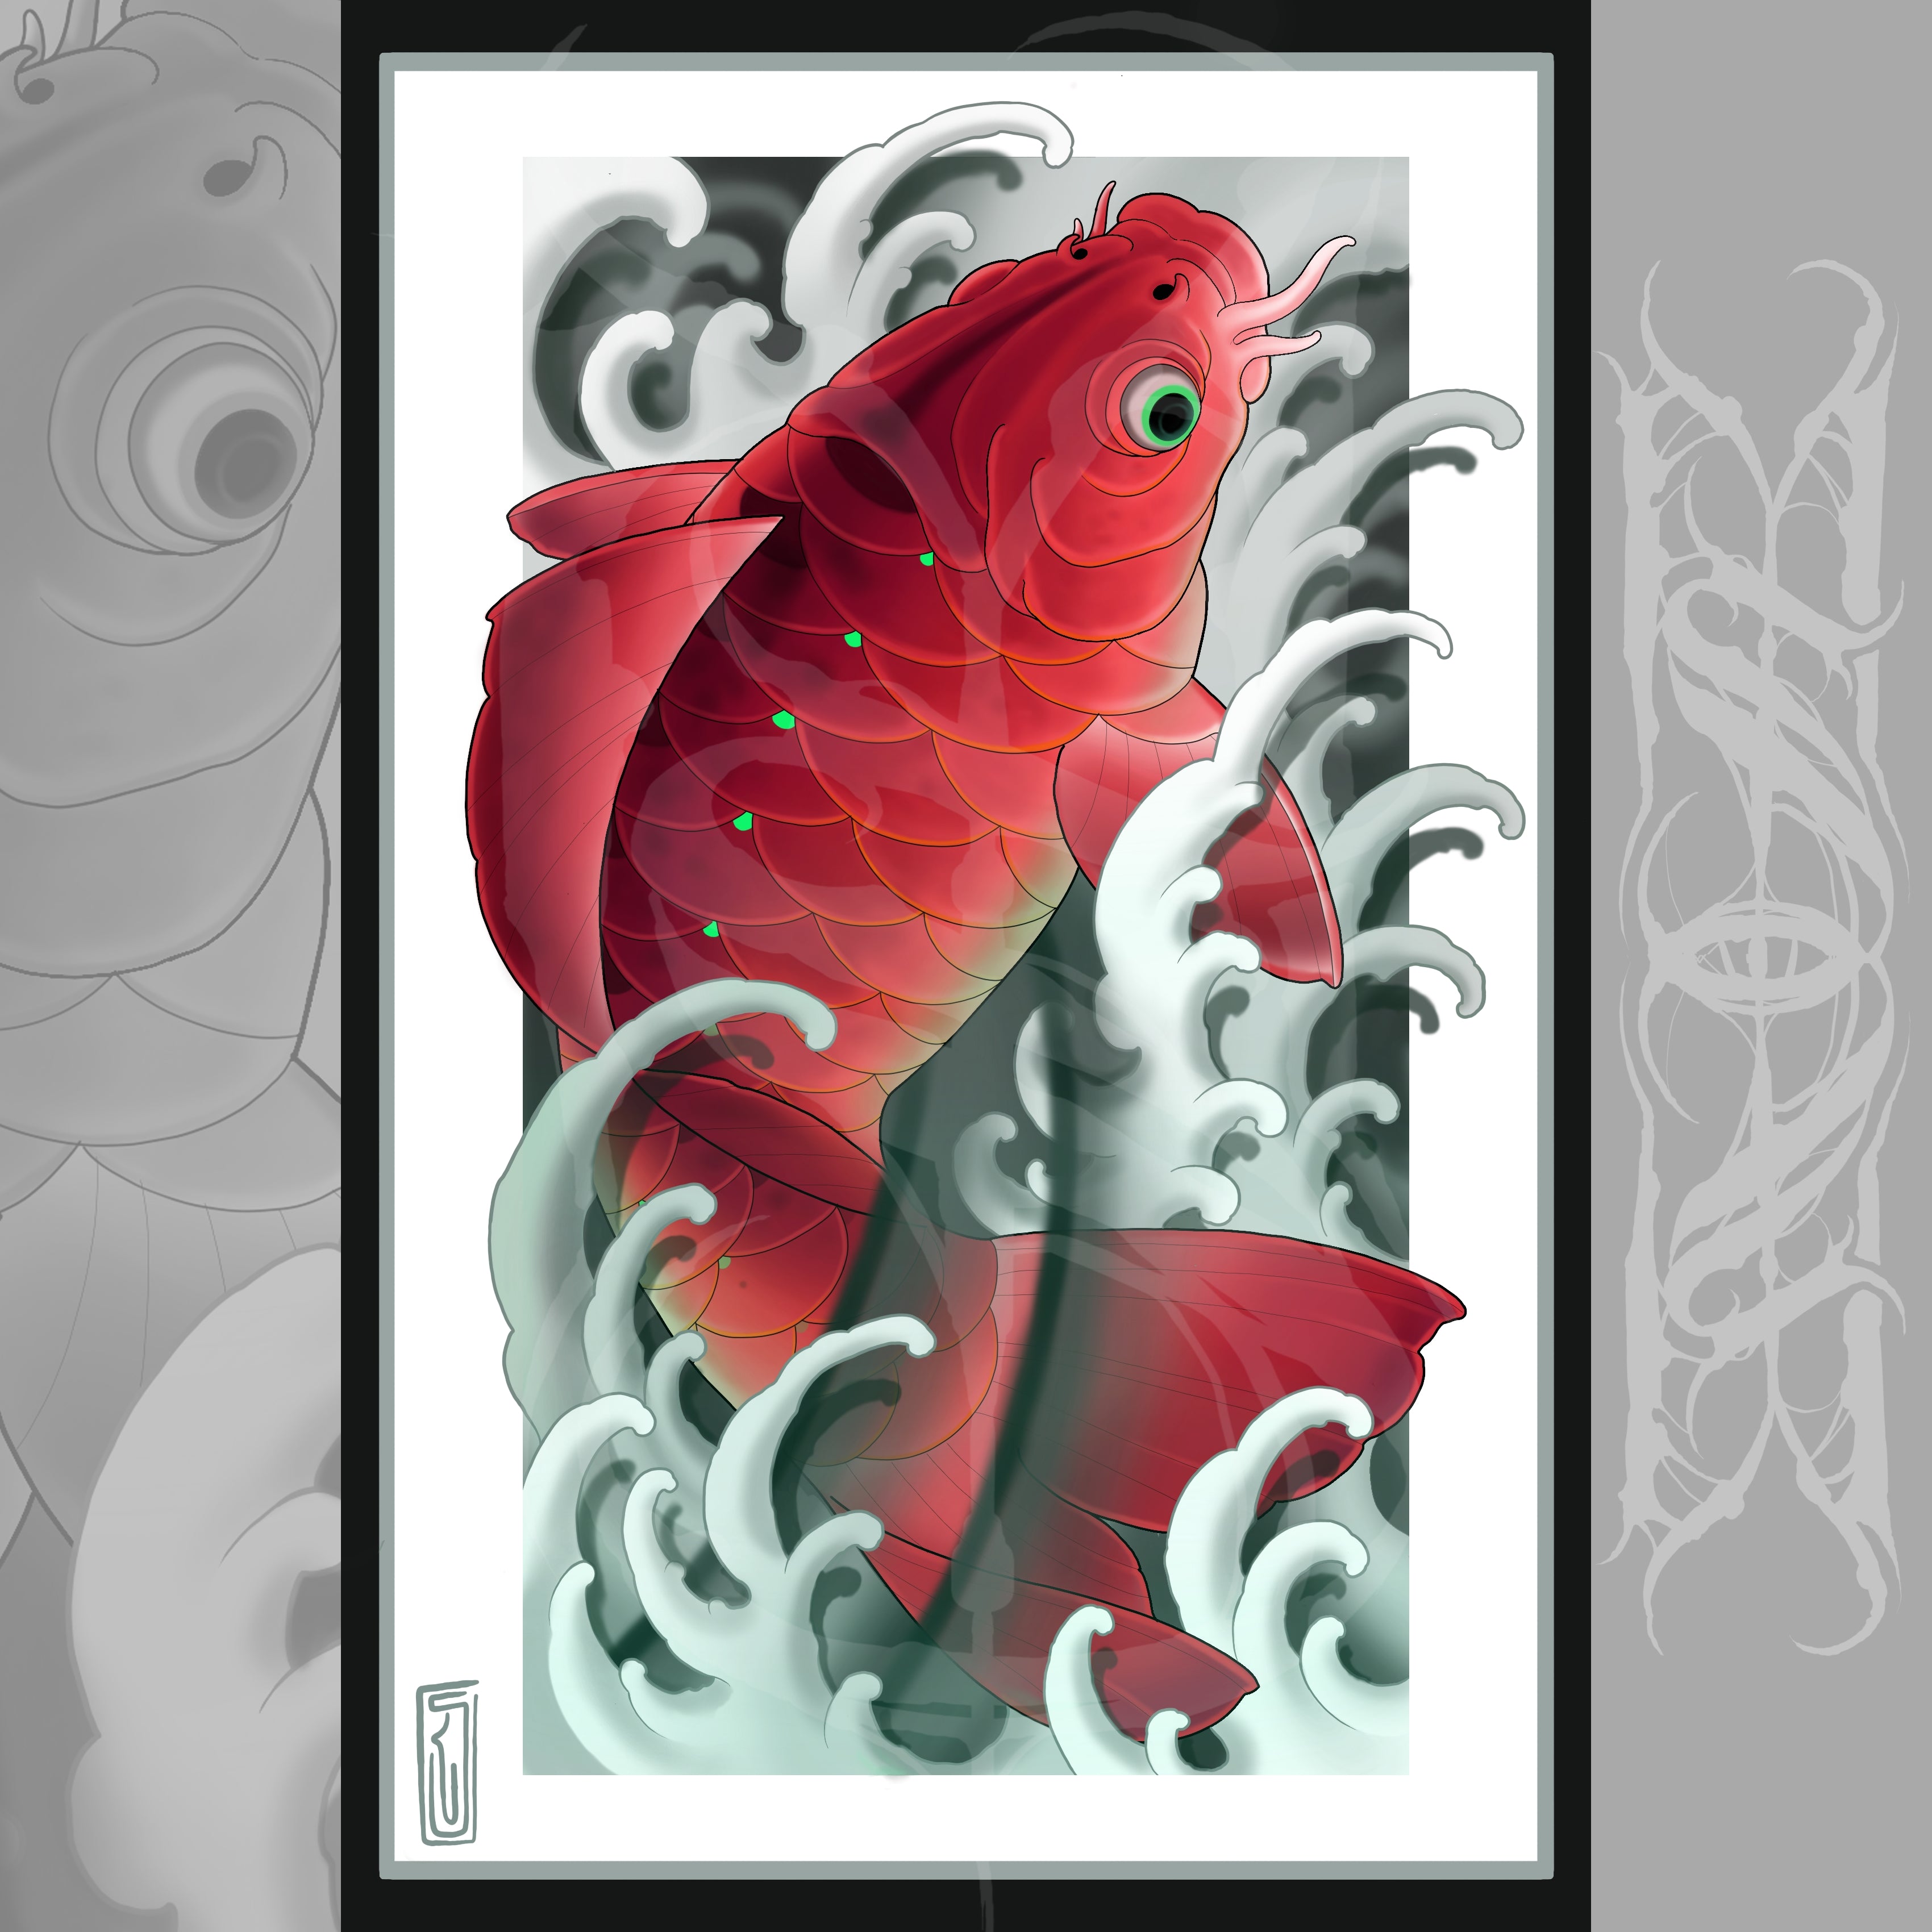 koi fish art tattoo